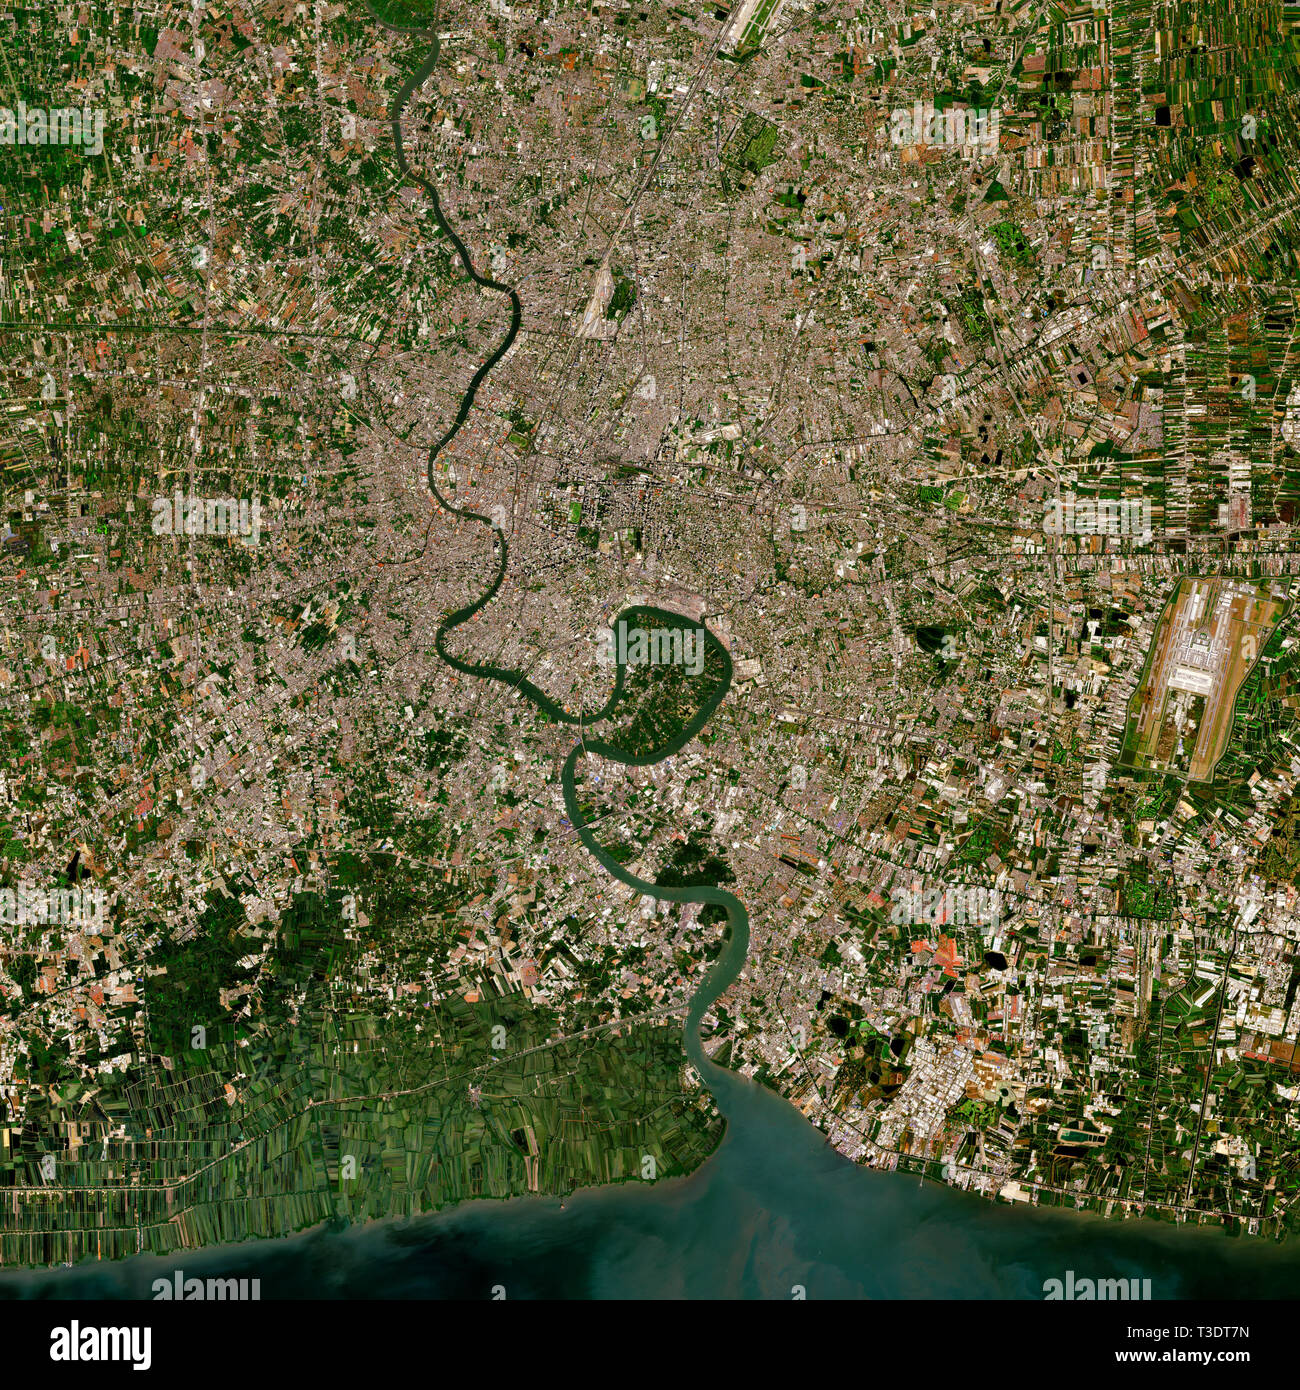 Bangkok en Thaïlande vu de l'espace - contient des données Sentinel Copernicus modifiés (2019) Banque D'Images